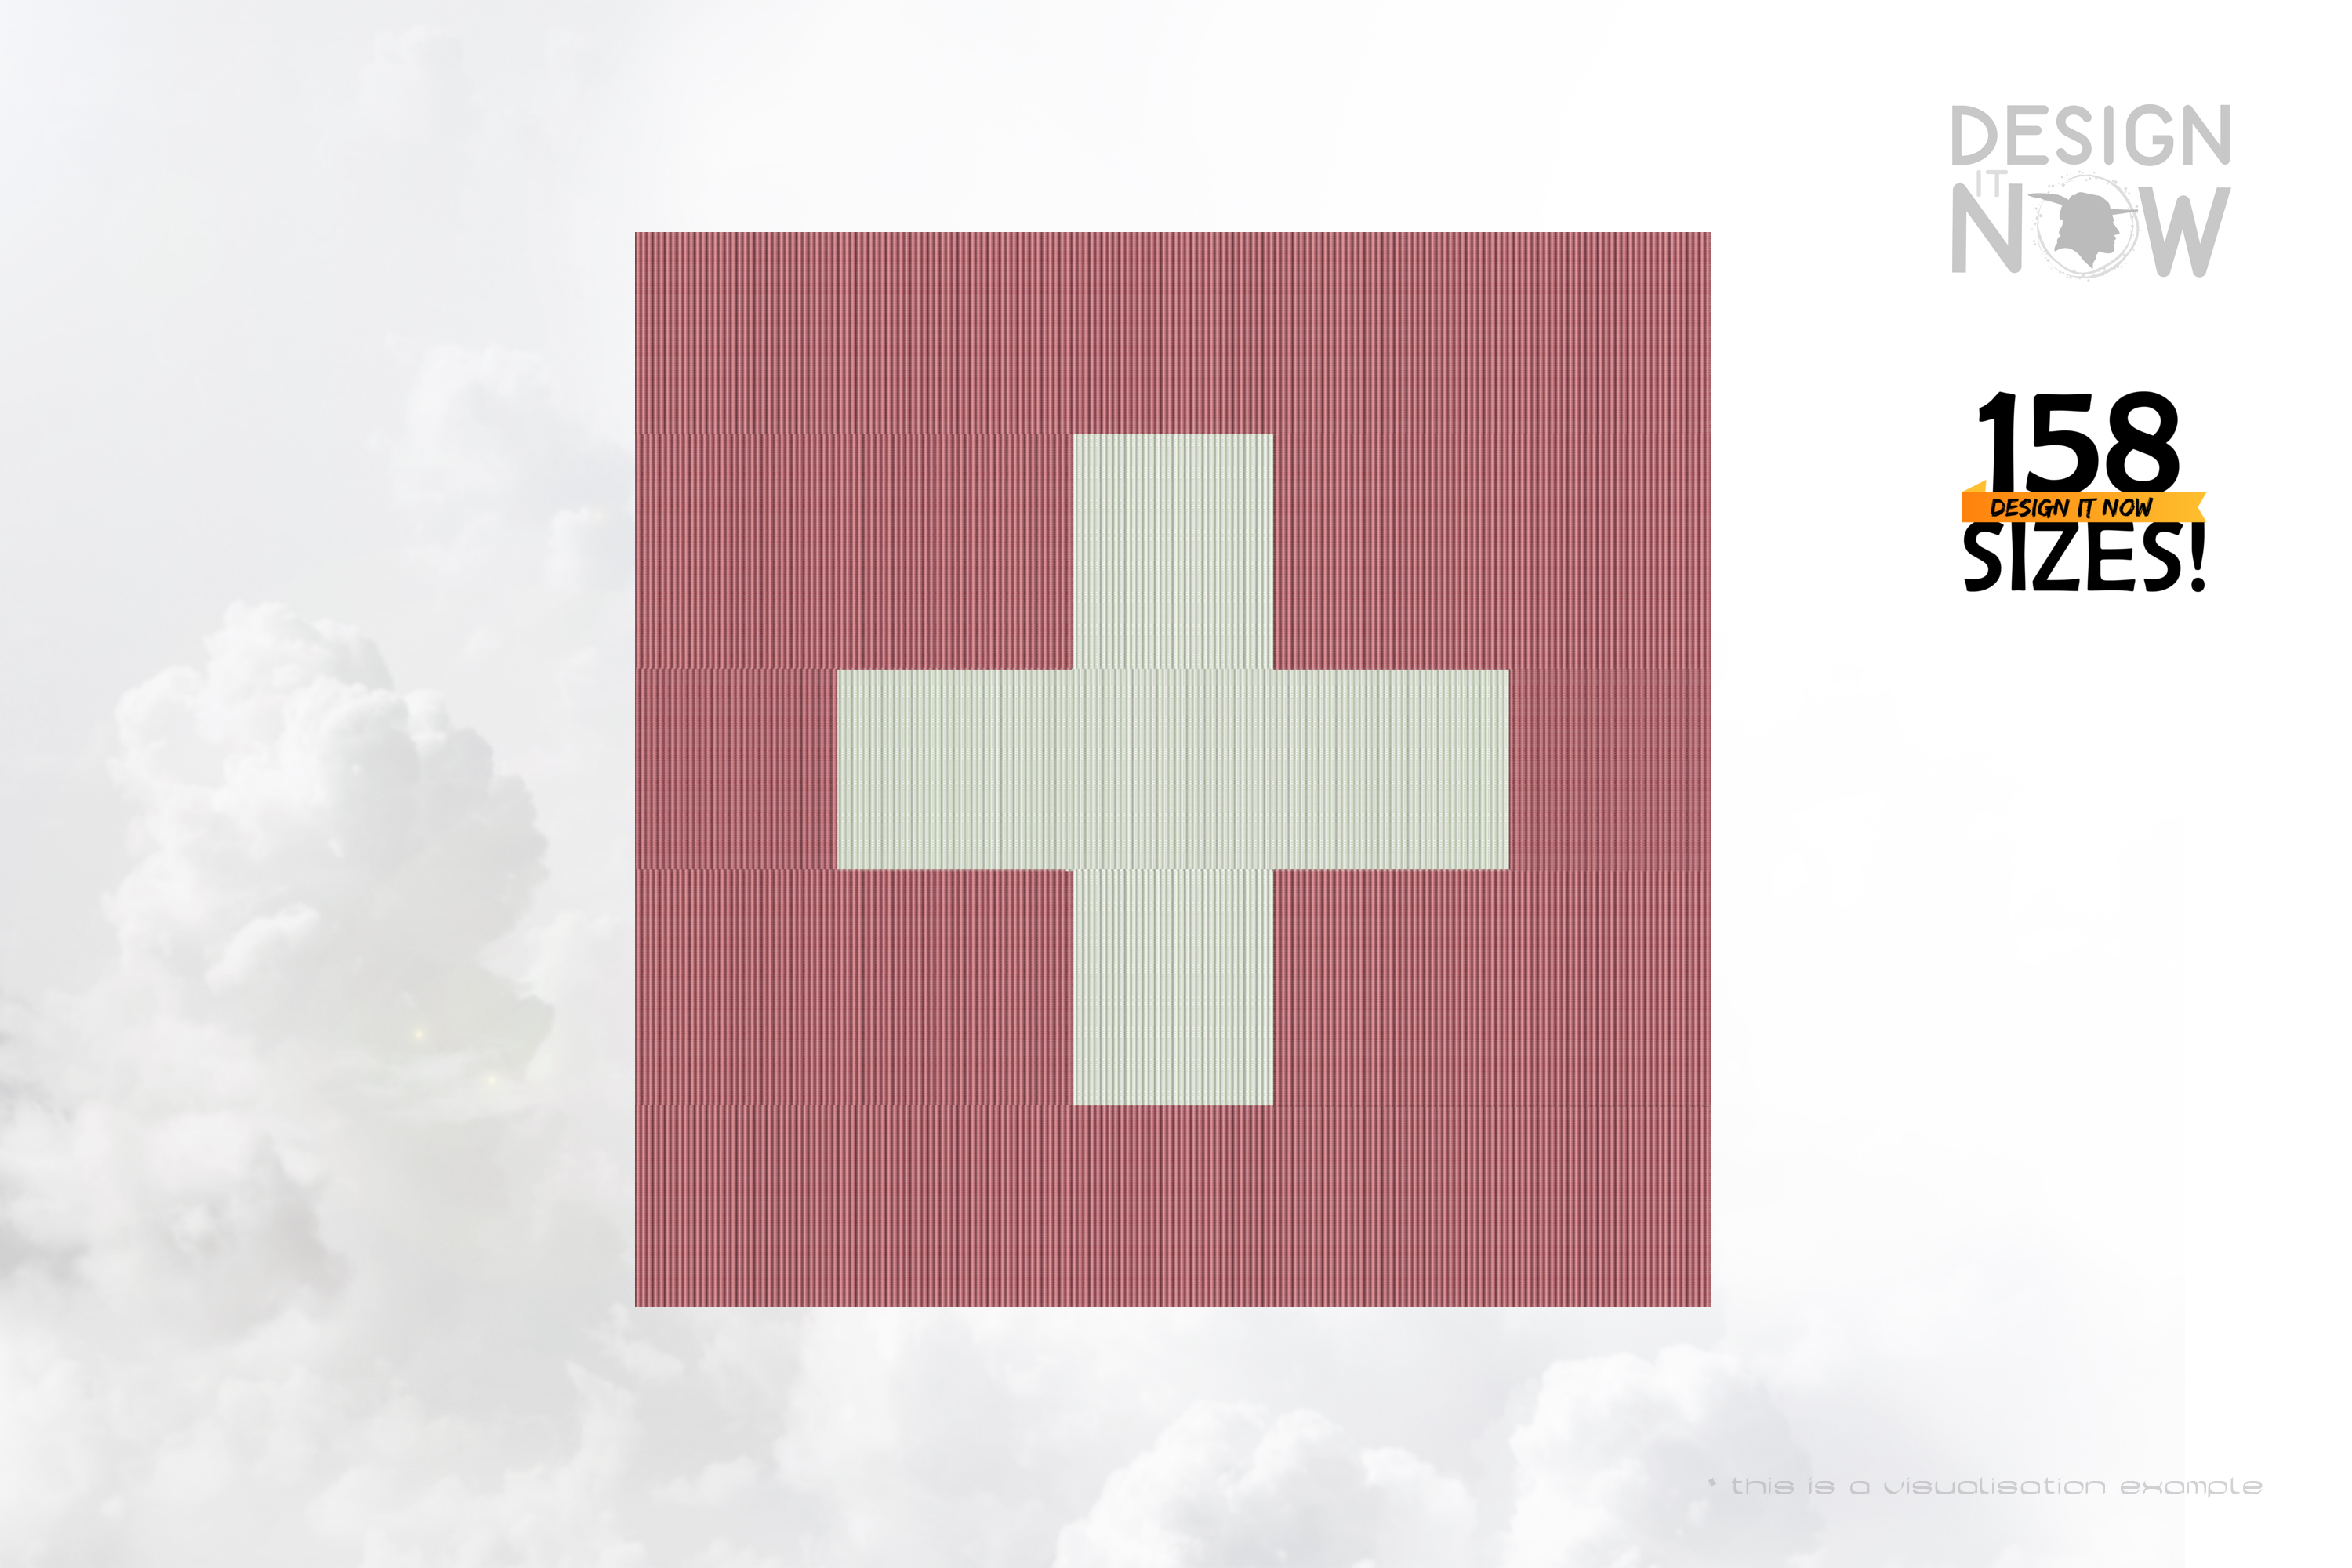 Switzerland-Suisse-Svizzera- Helvetia-Swiss Confederation